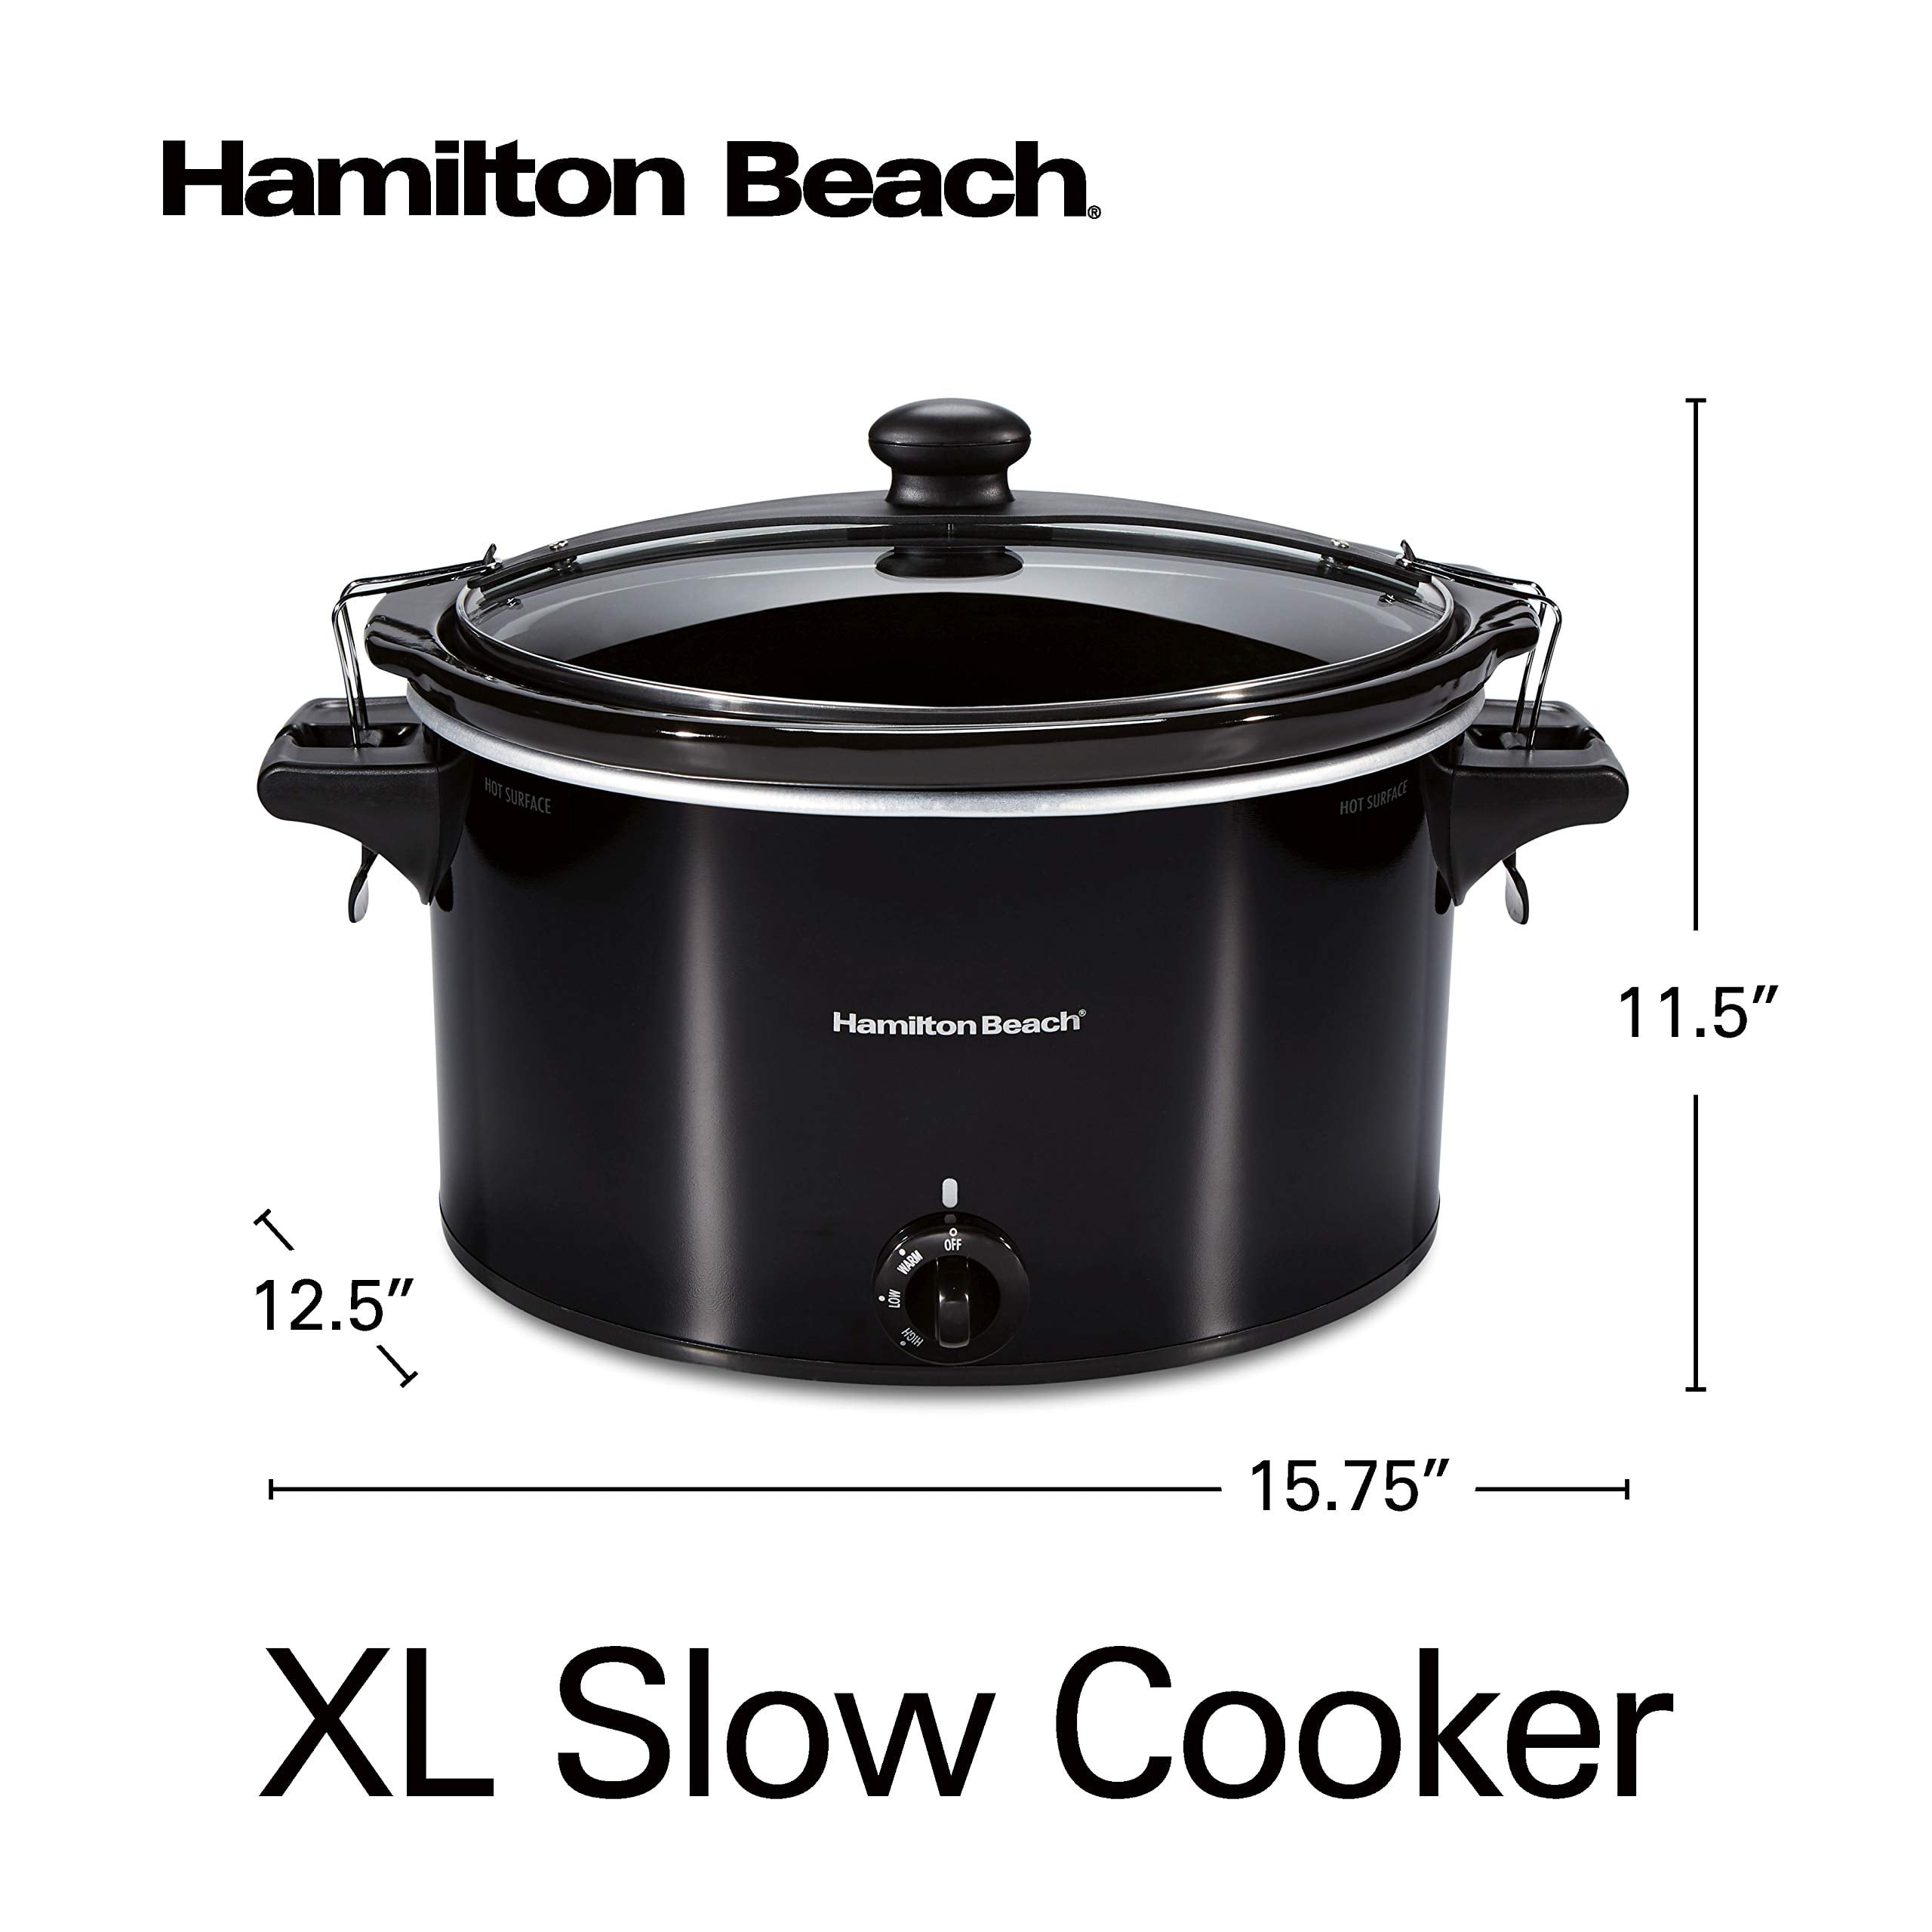 Slow Cooker, Extra Large 10 Quart, Stay or Go Portable with Lid Lock, Dishwasher Safe Crock - Black